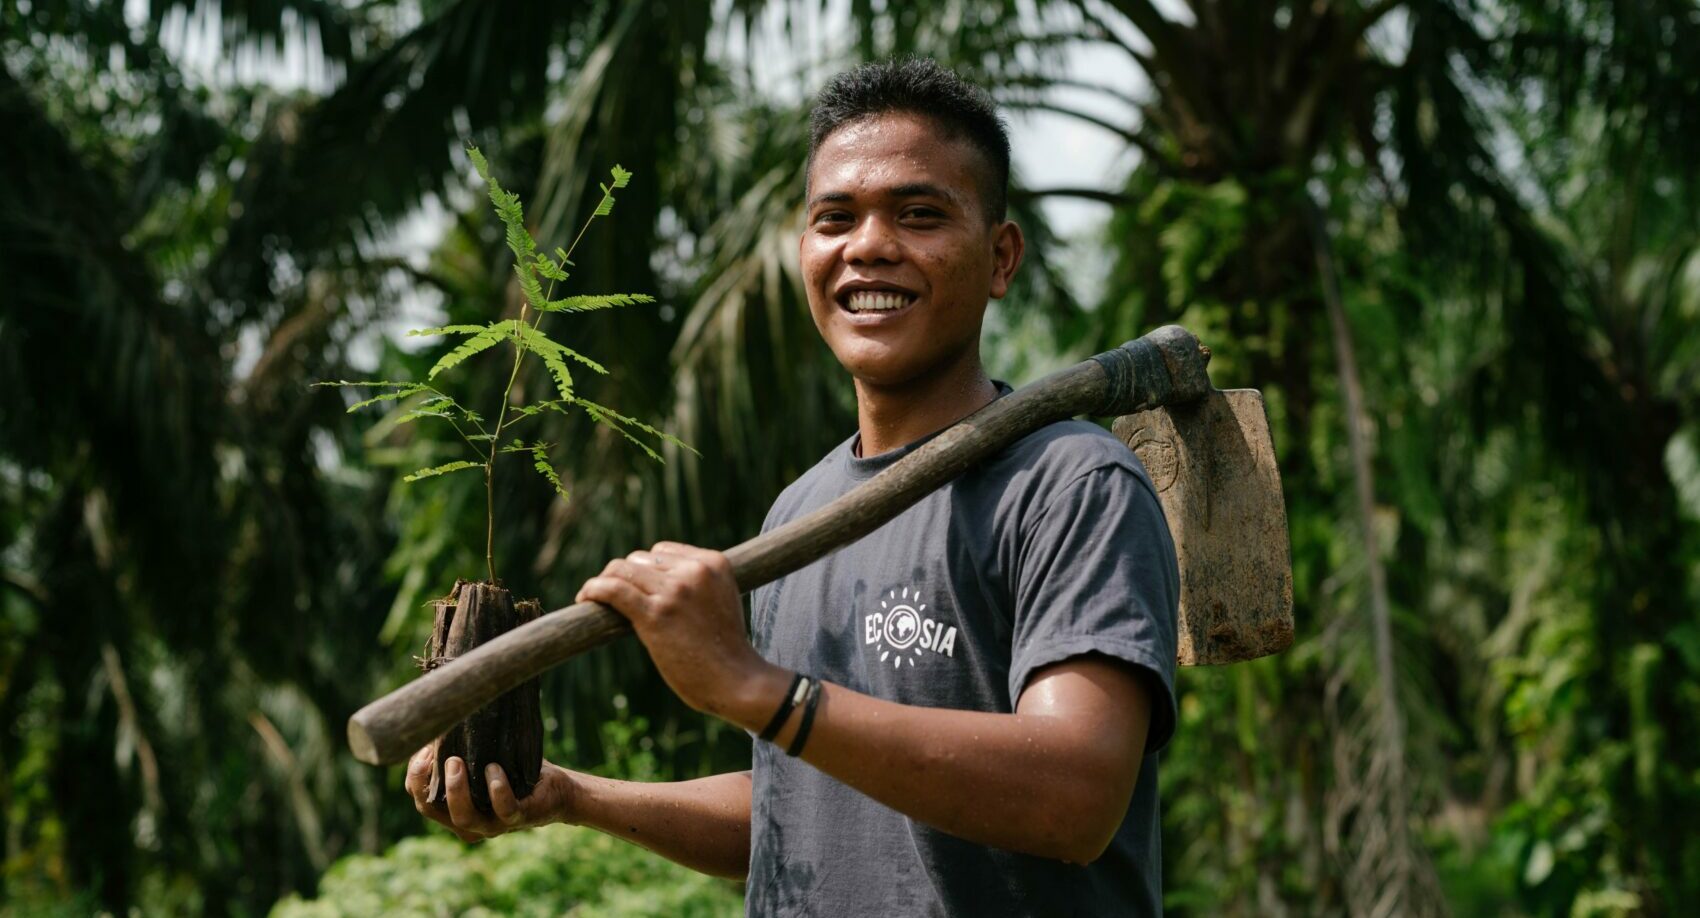 Ecosia planting trees